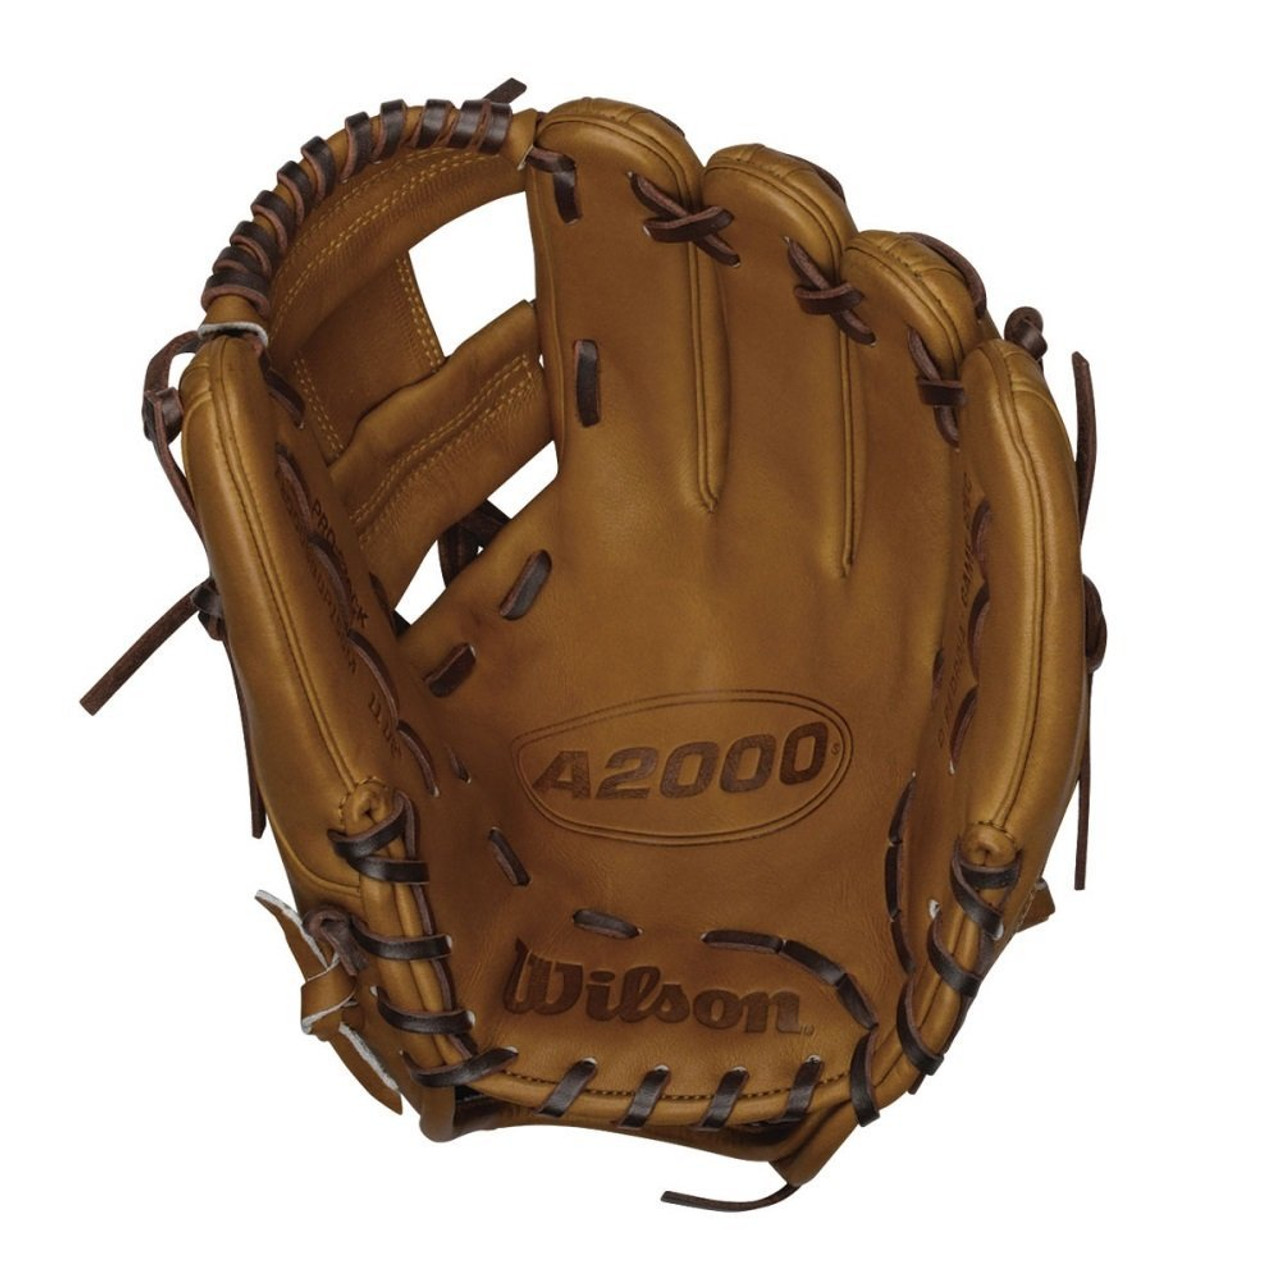 Spalding Robinson Cano Pro Select Game Model Baseball Glove 11.50